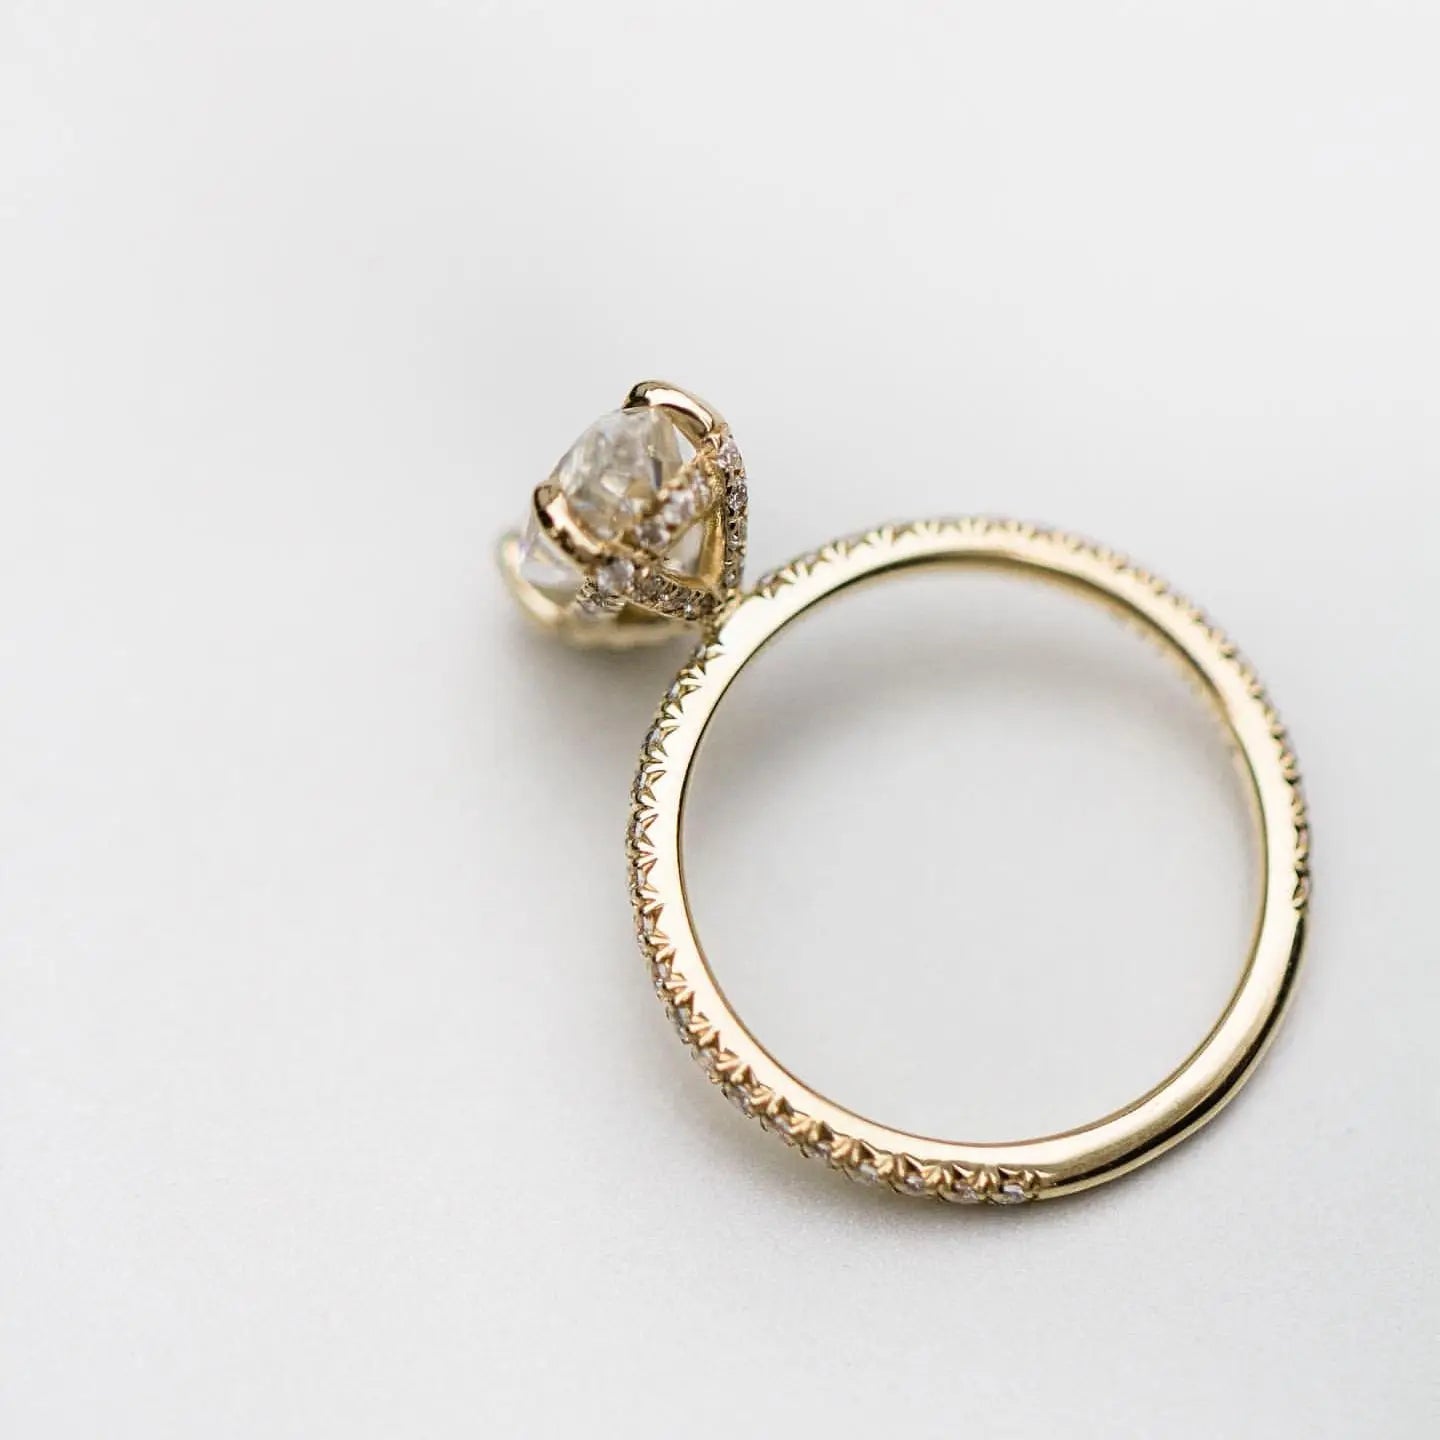 3 Carat Marquise Cut Diamond Moissanite Pave Wedding Ring